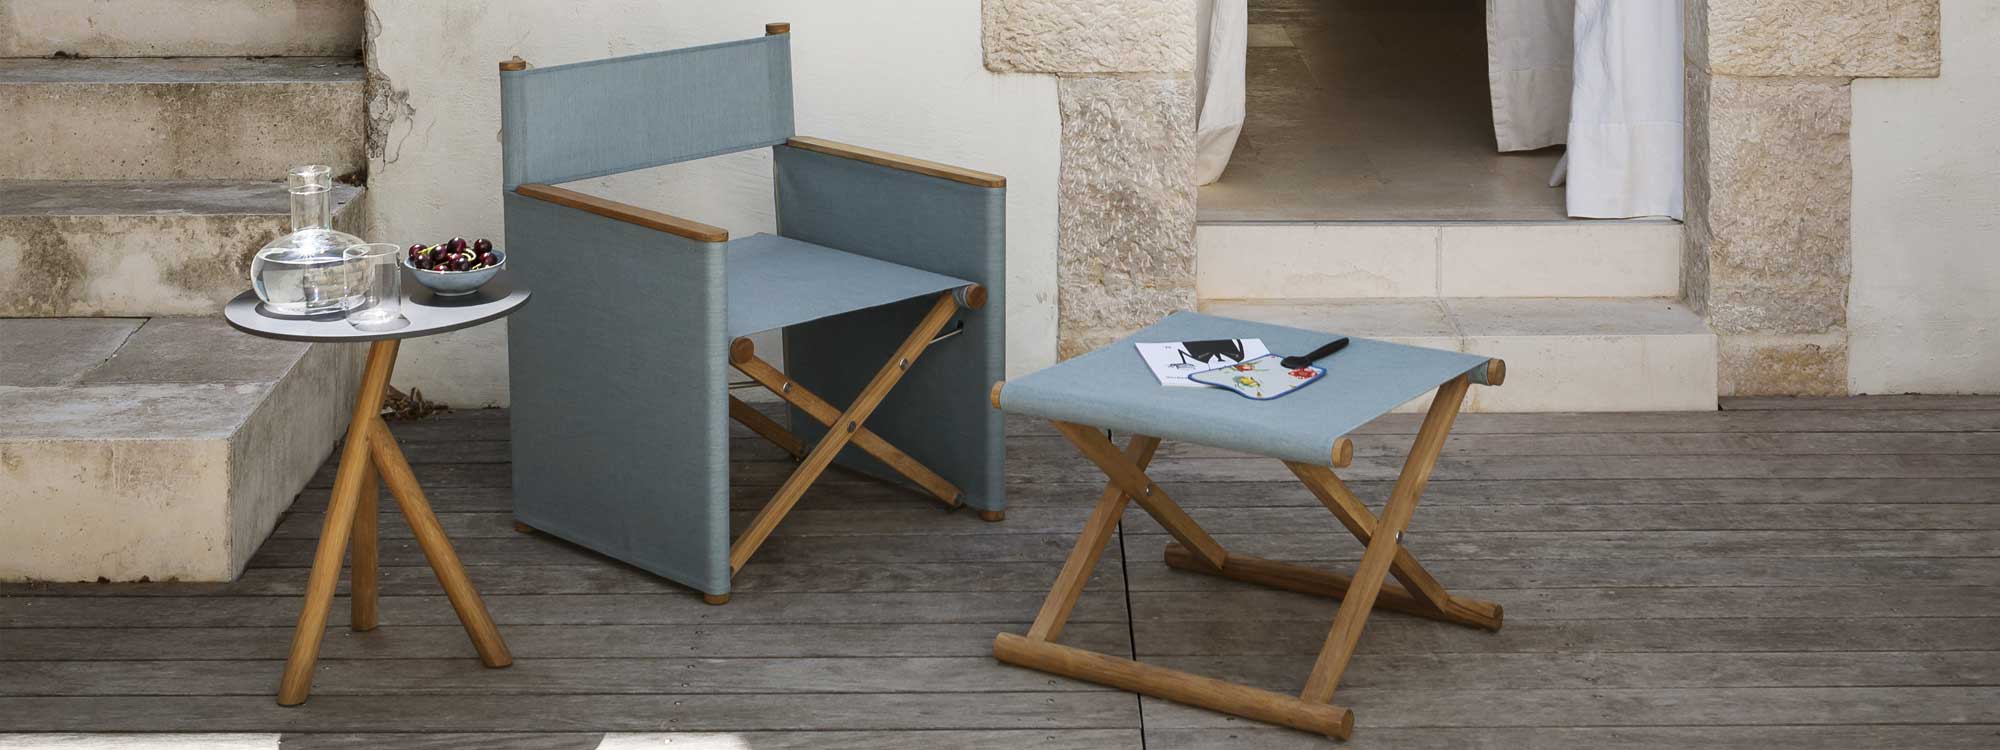 Orson folding garden lounge chair & footstool in teak and Batyline fabric